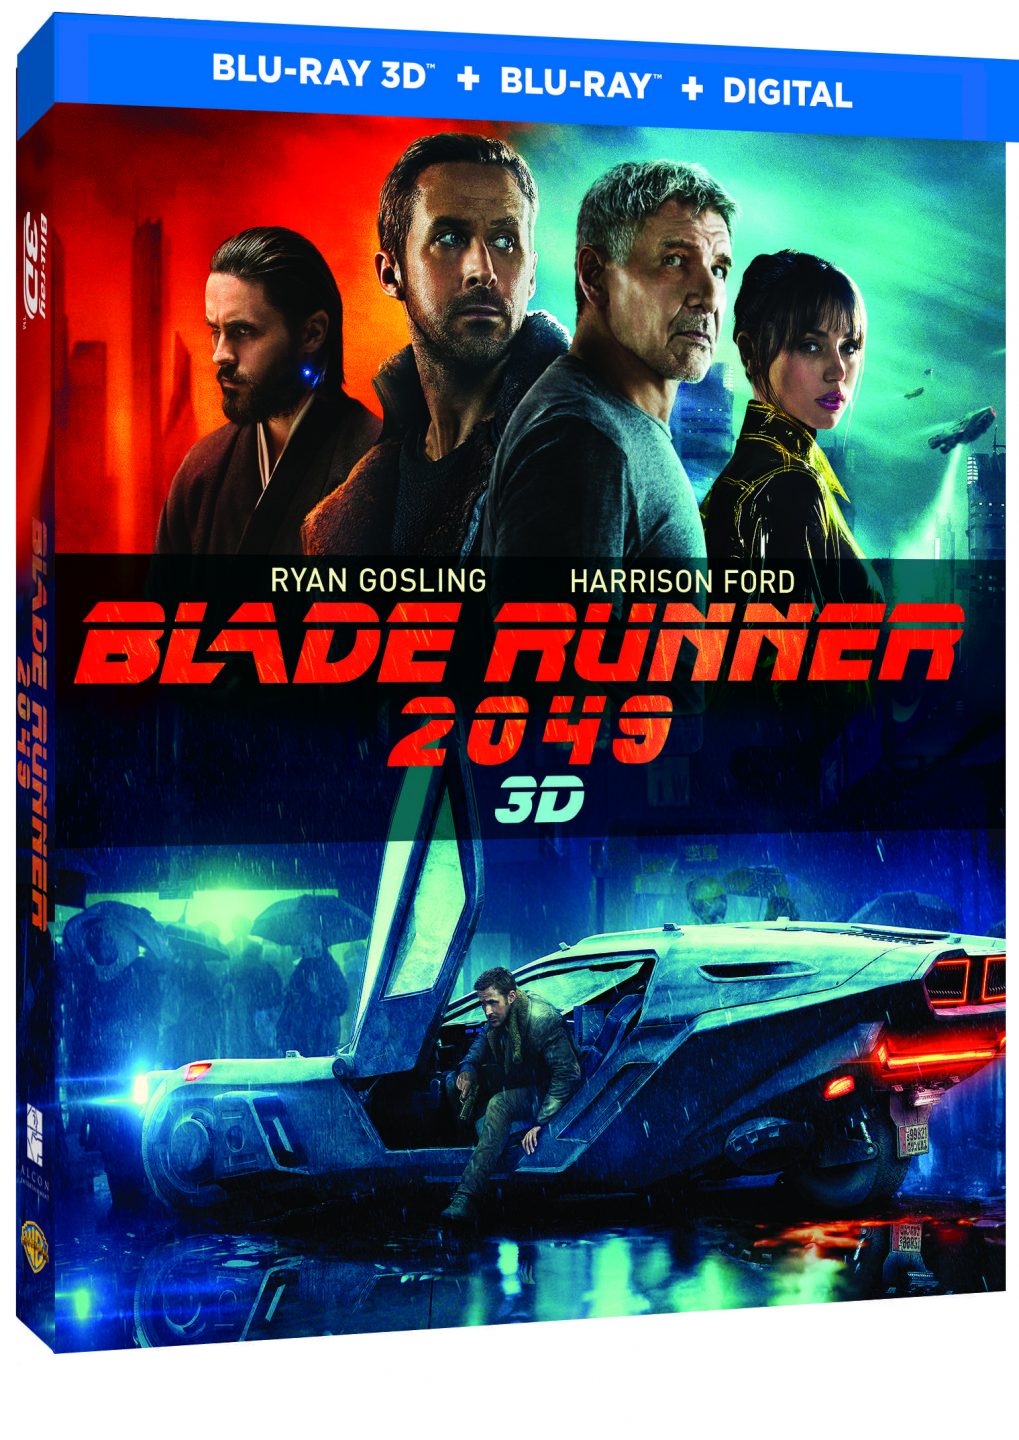 Blade Runner 2049 Blu-Ray/DVD/Digital HD (Warner Bros. Home Entertainment)